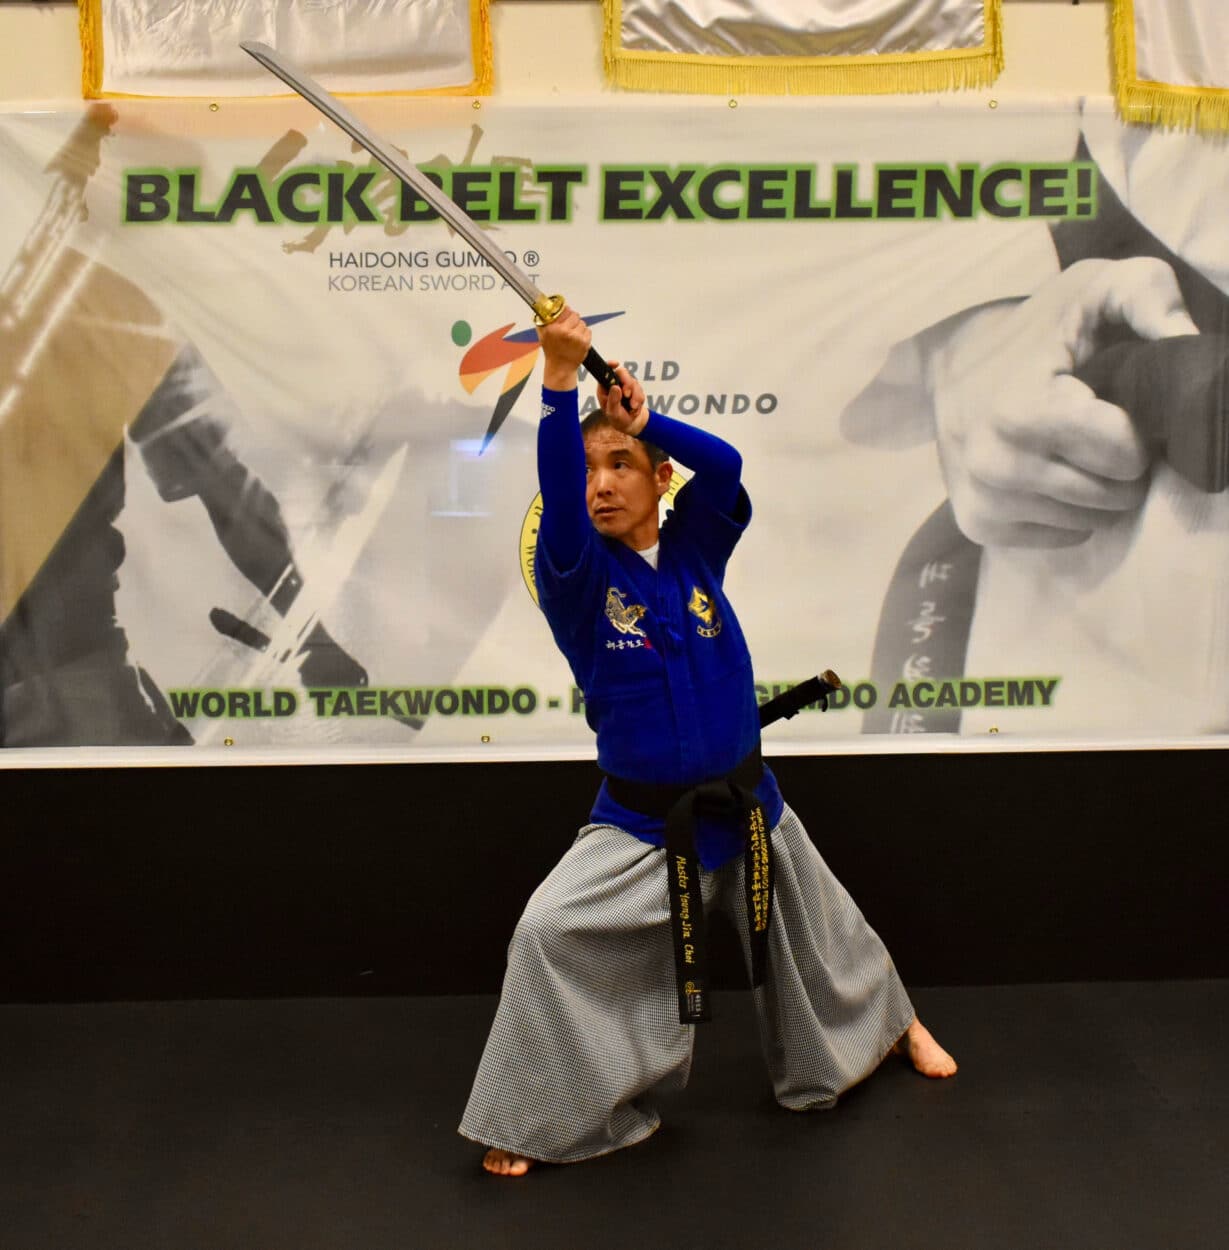 World Taekwondo - Haidong Gumdo Academy Special Offers image